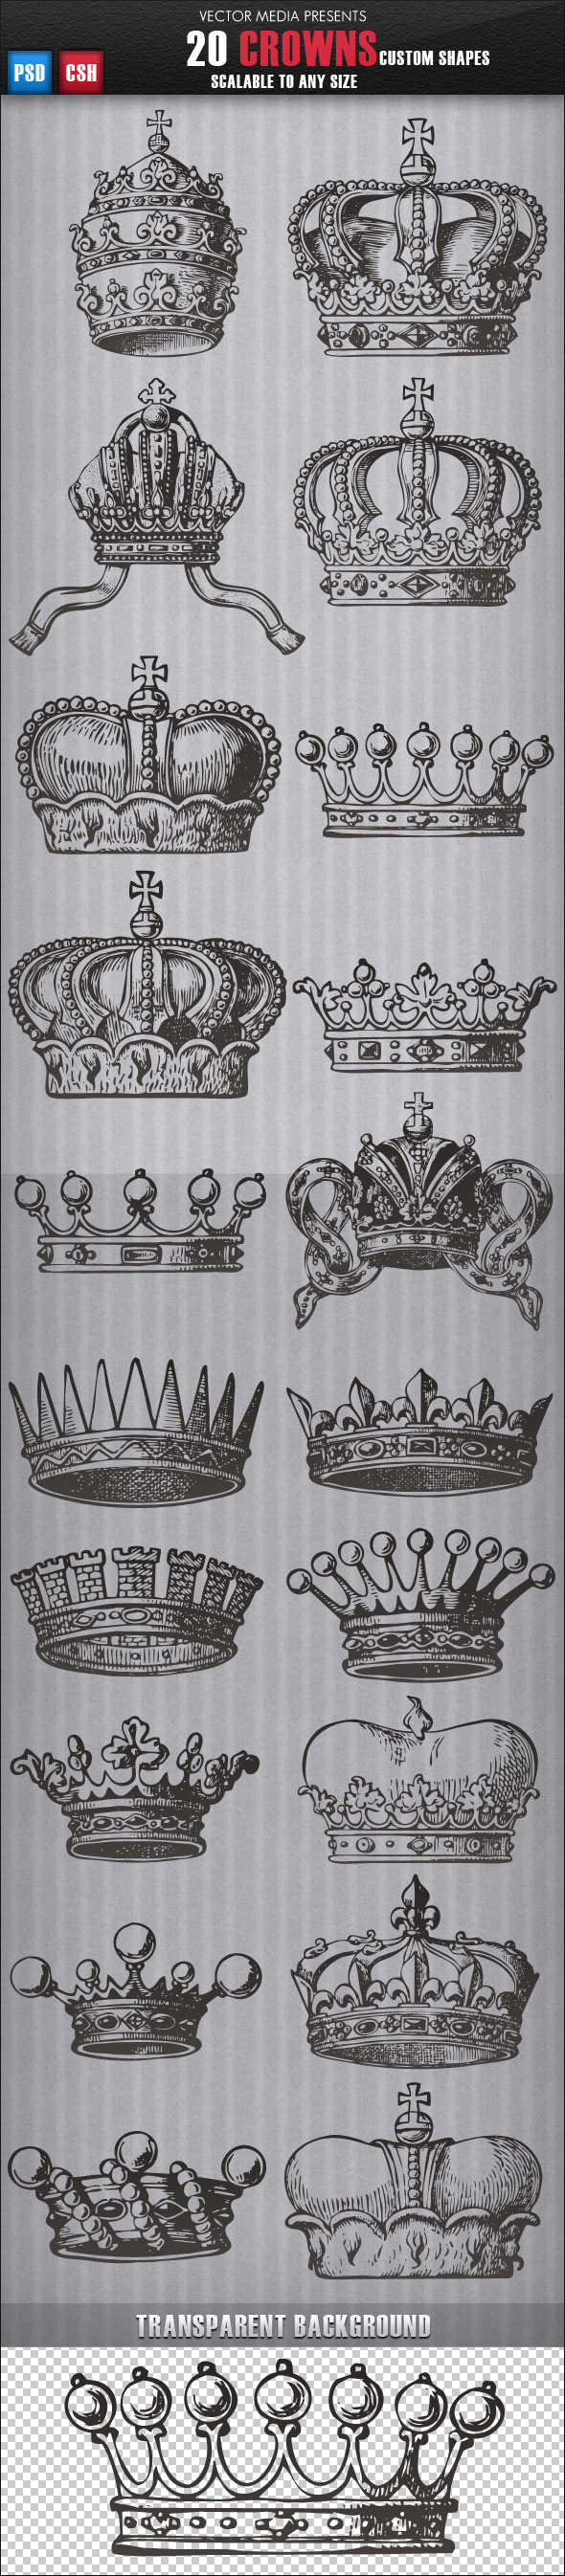 20 Crowns - Custom Shapes